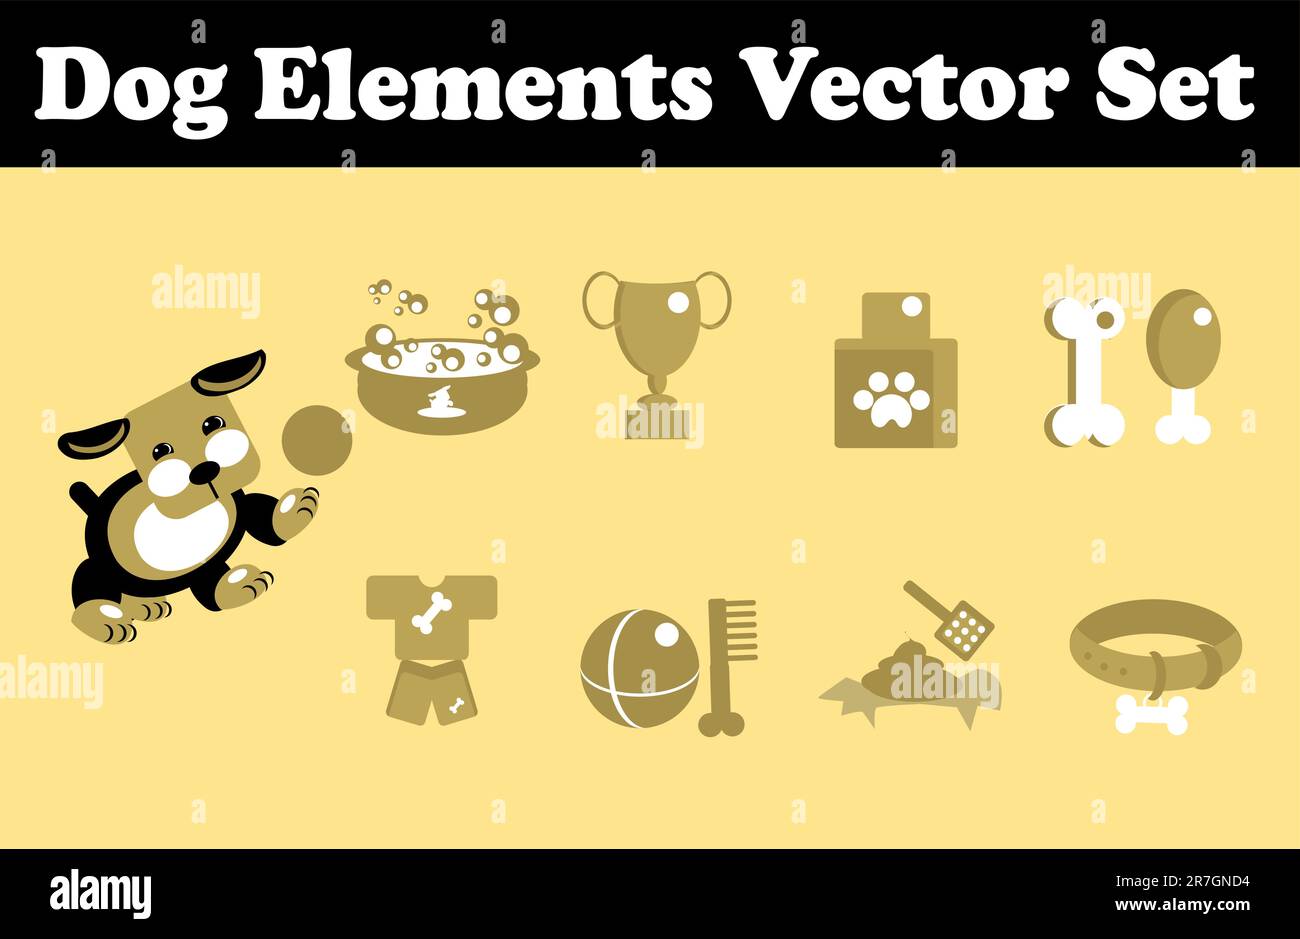 Dog Elements Vector Set Stock Vector